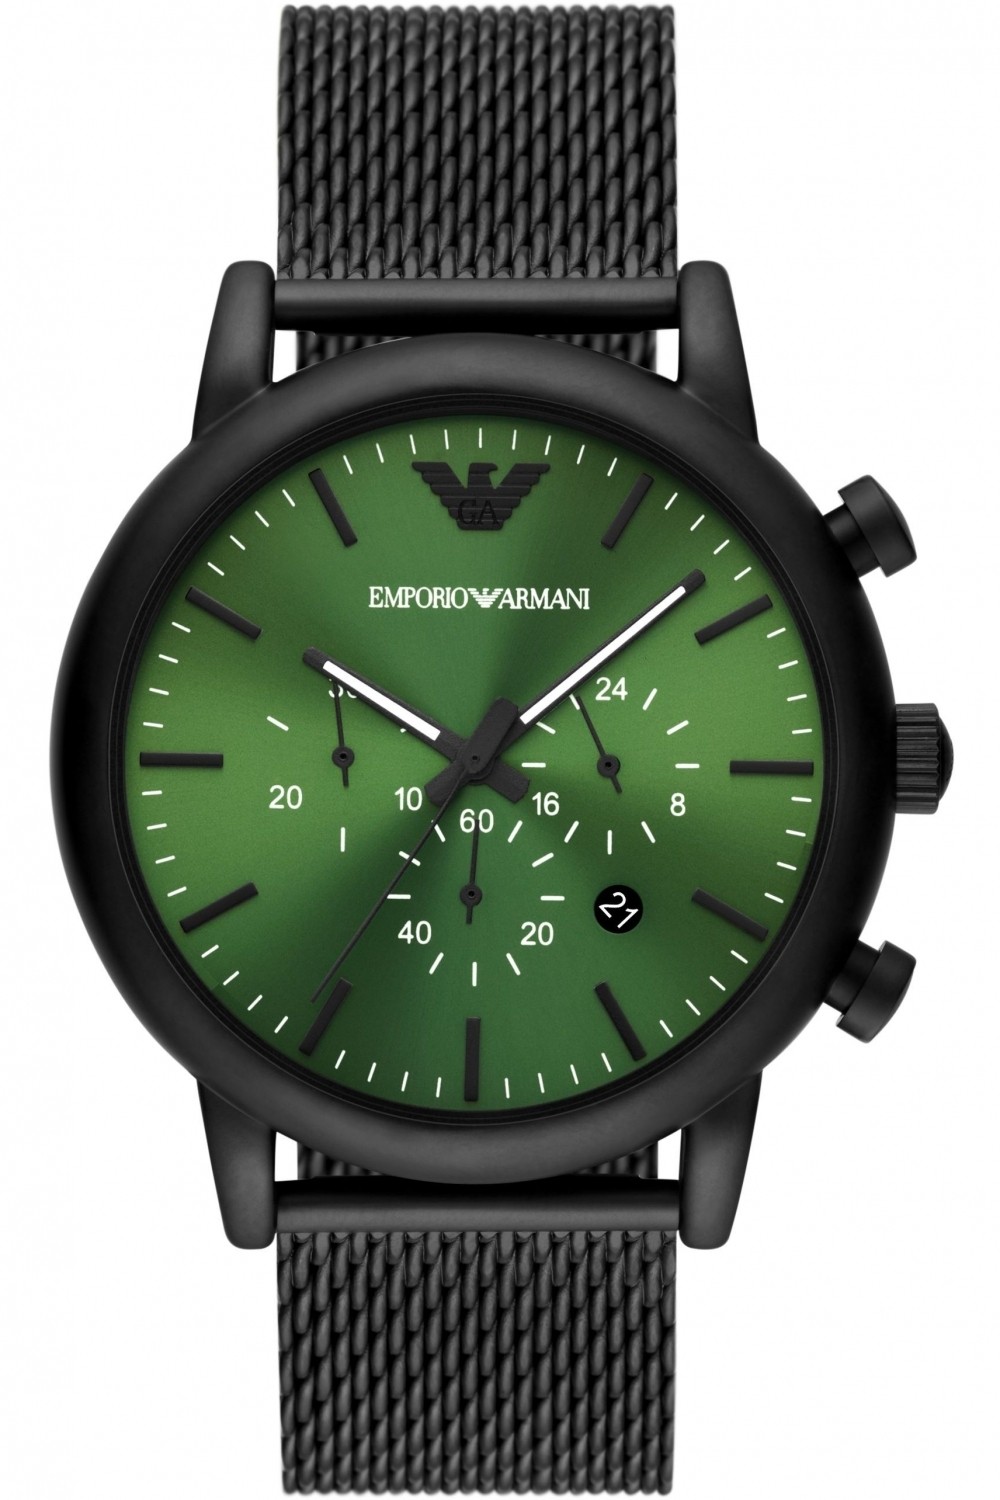 Emporio Armani Men's Luigi Green Dial Black Mesh Watch AR11470